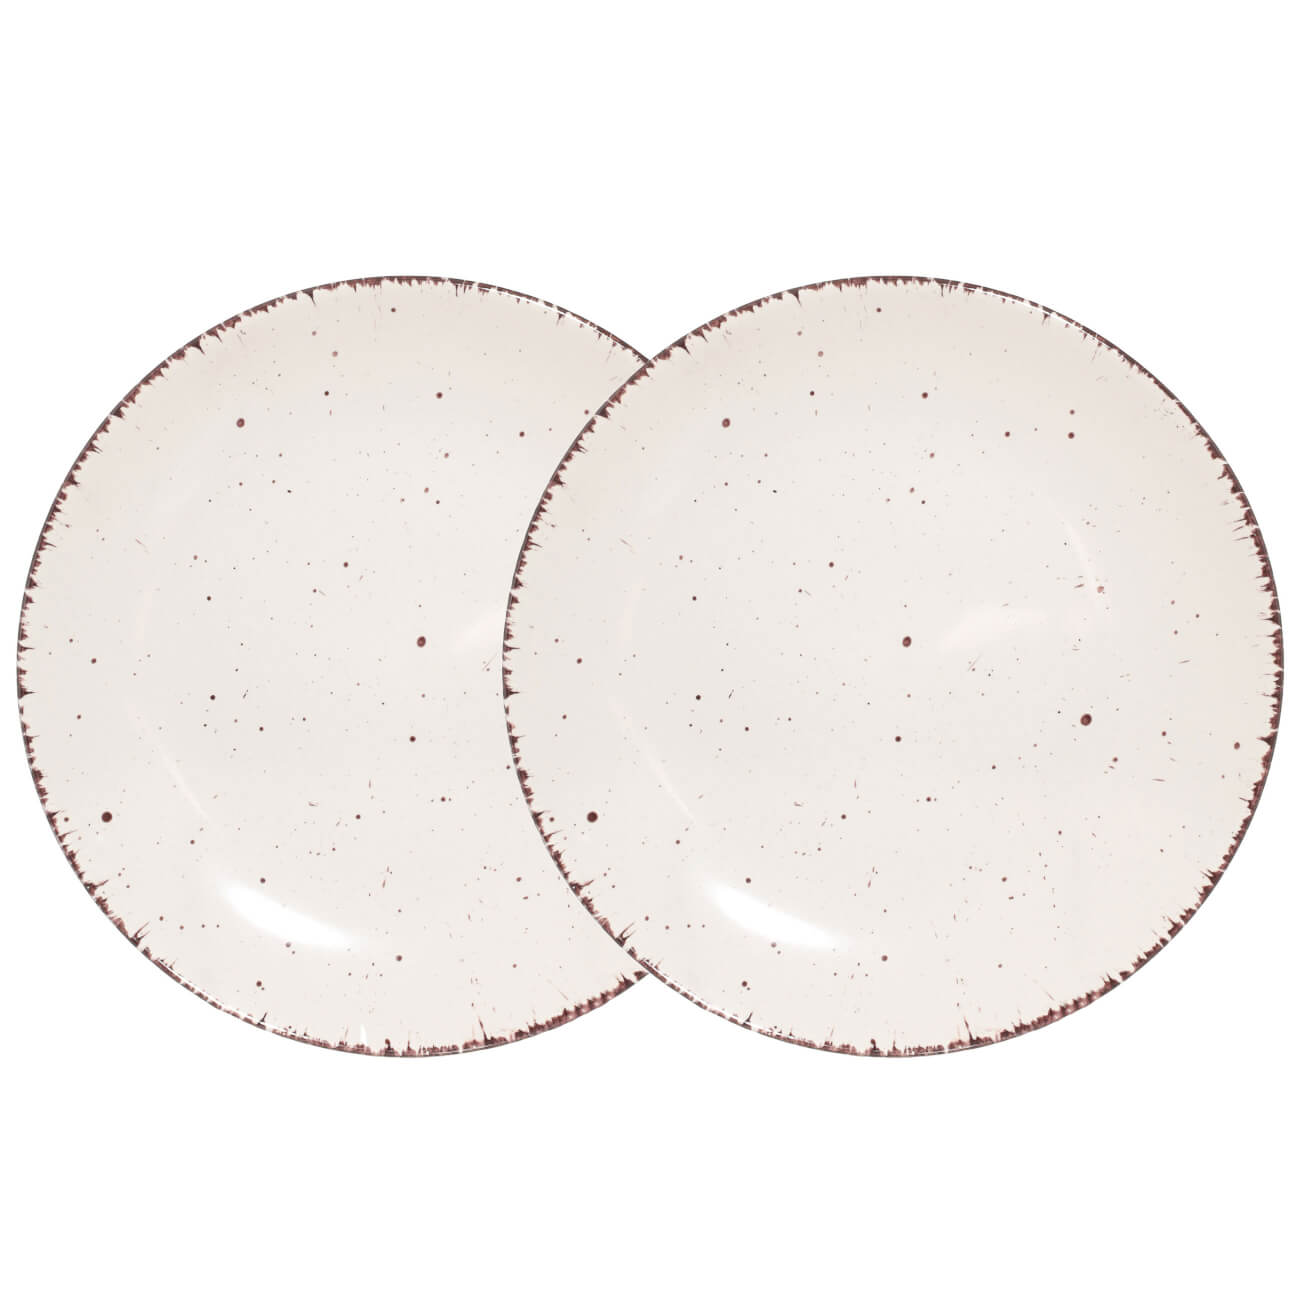 тарелка закусочная lefard 20 см кремовая Тарелка закусочная, 21 см, 2 шт, керамика, бежевая, в крапинку, Speckled